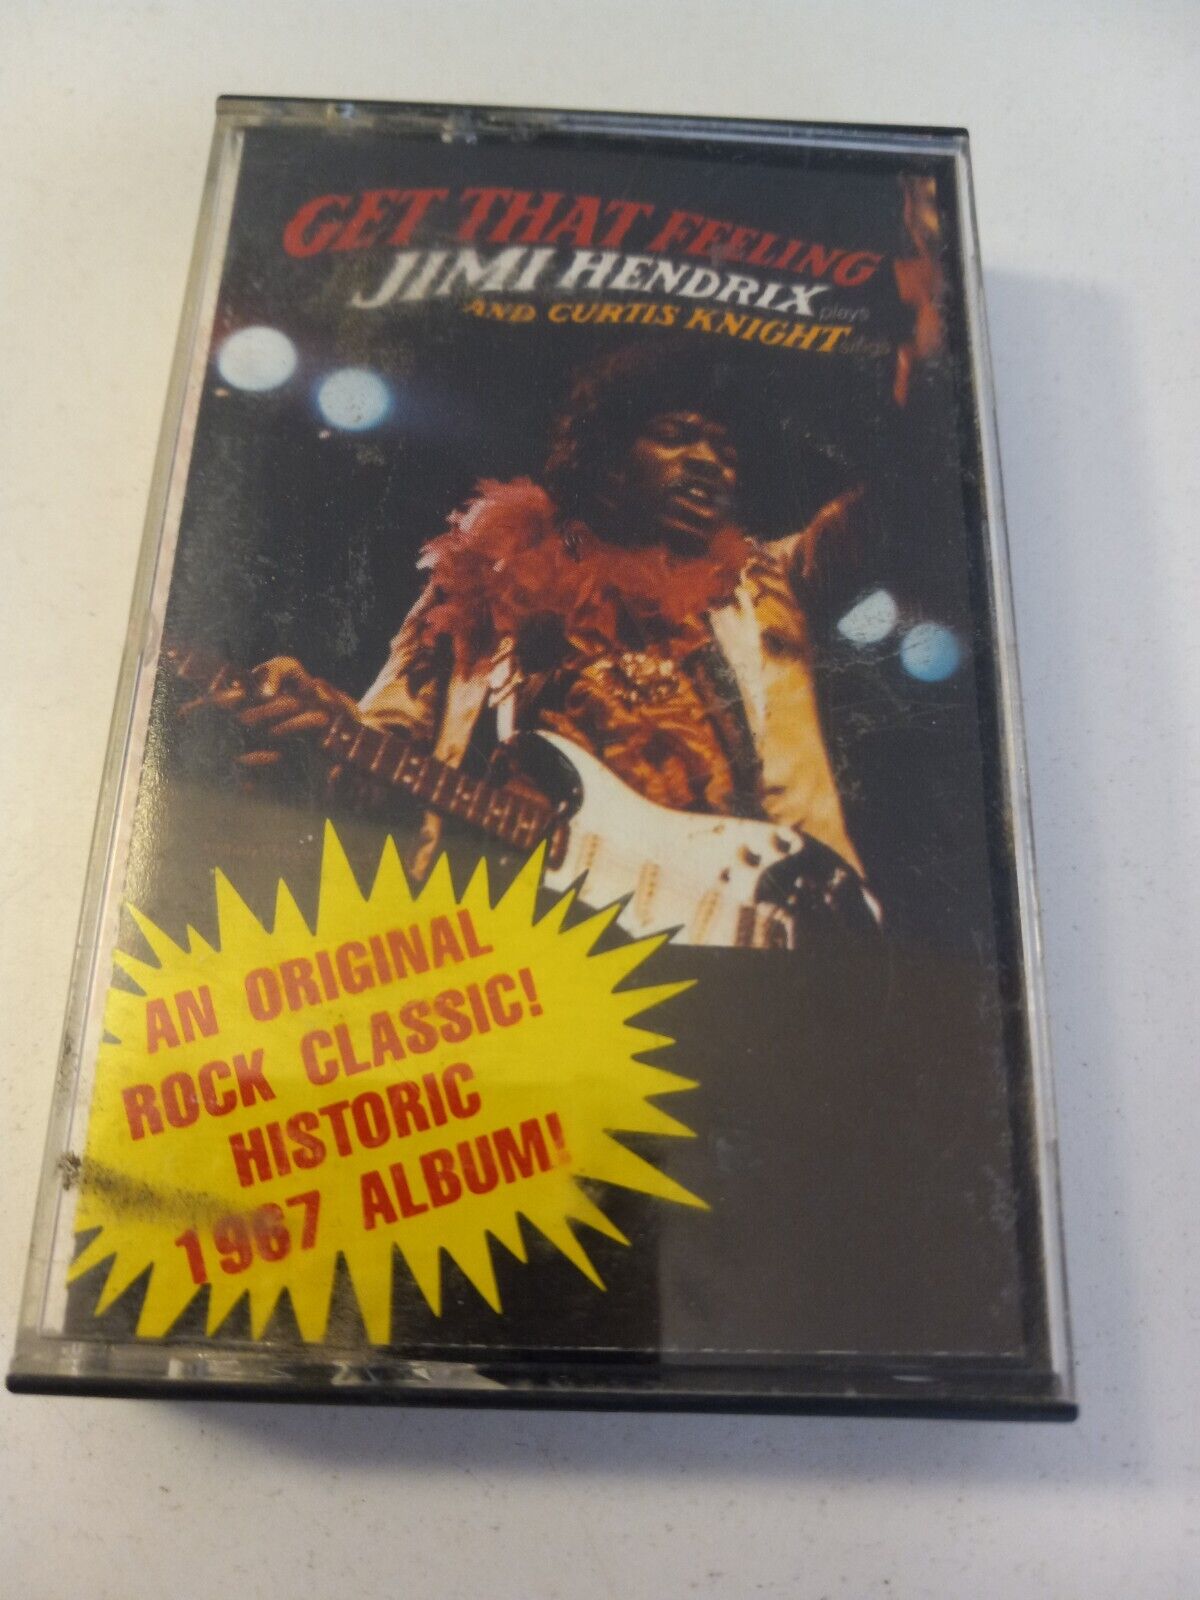 Vintage JIMI HENDRIX CURTIS KNIGHT GET THAT FEELING Cassette